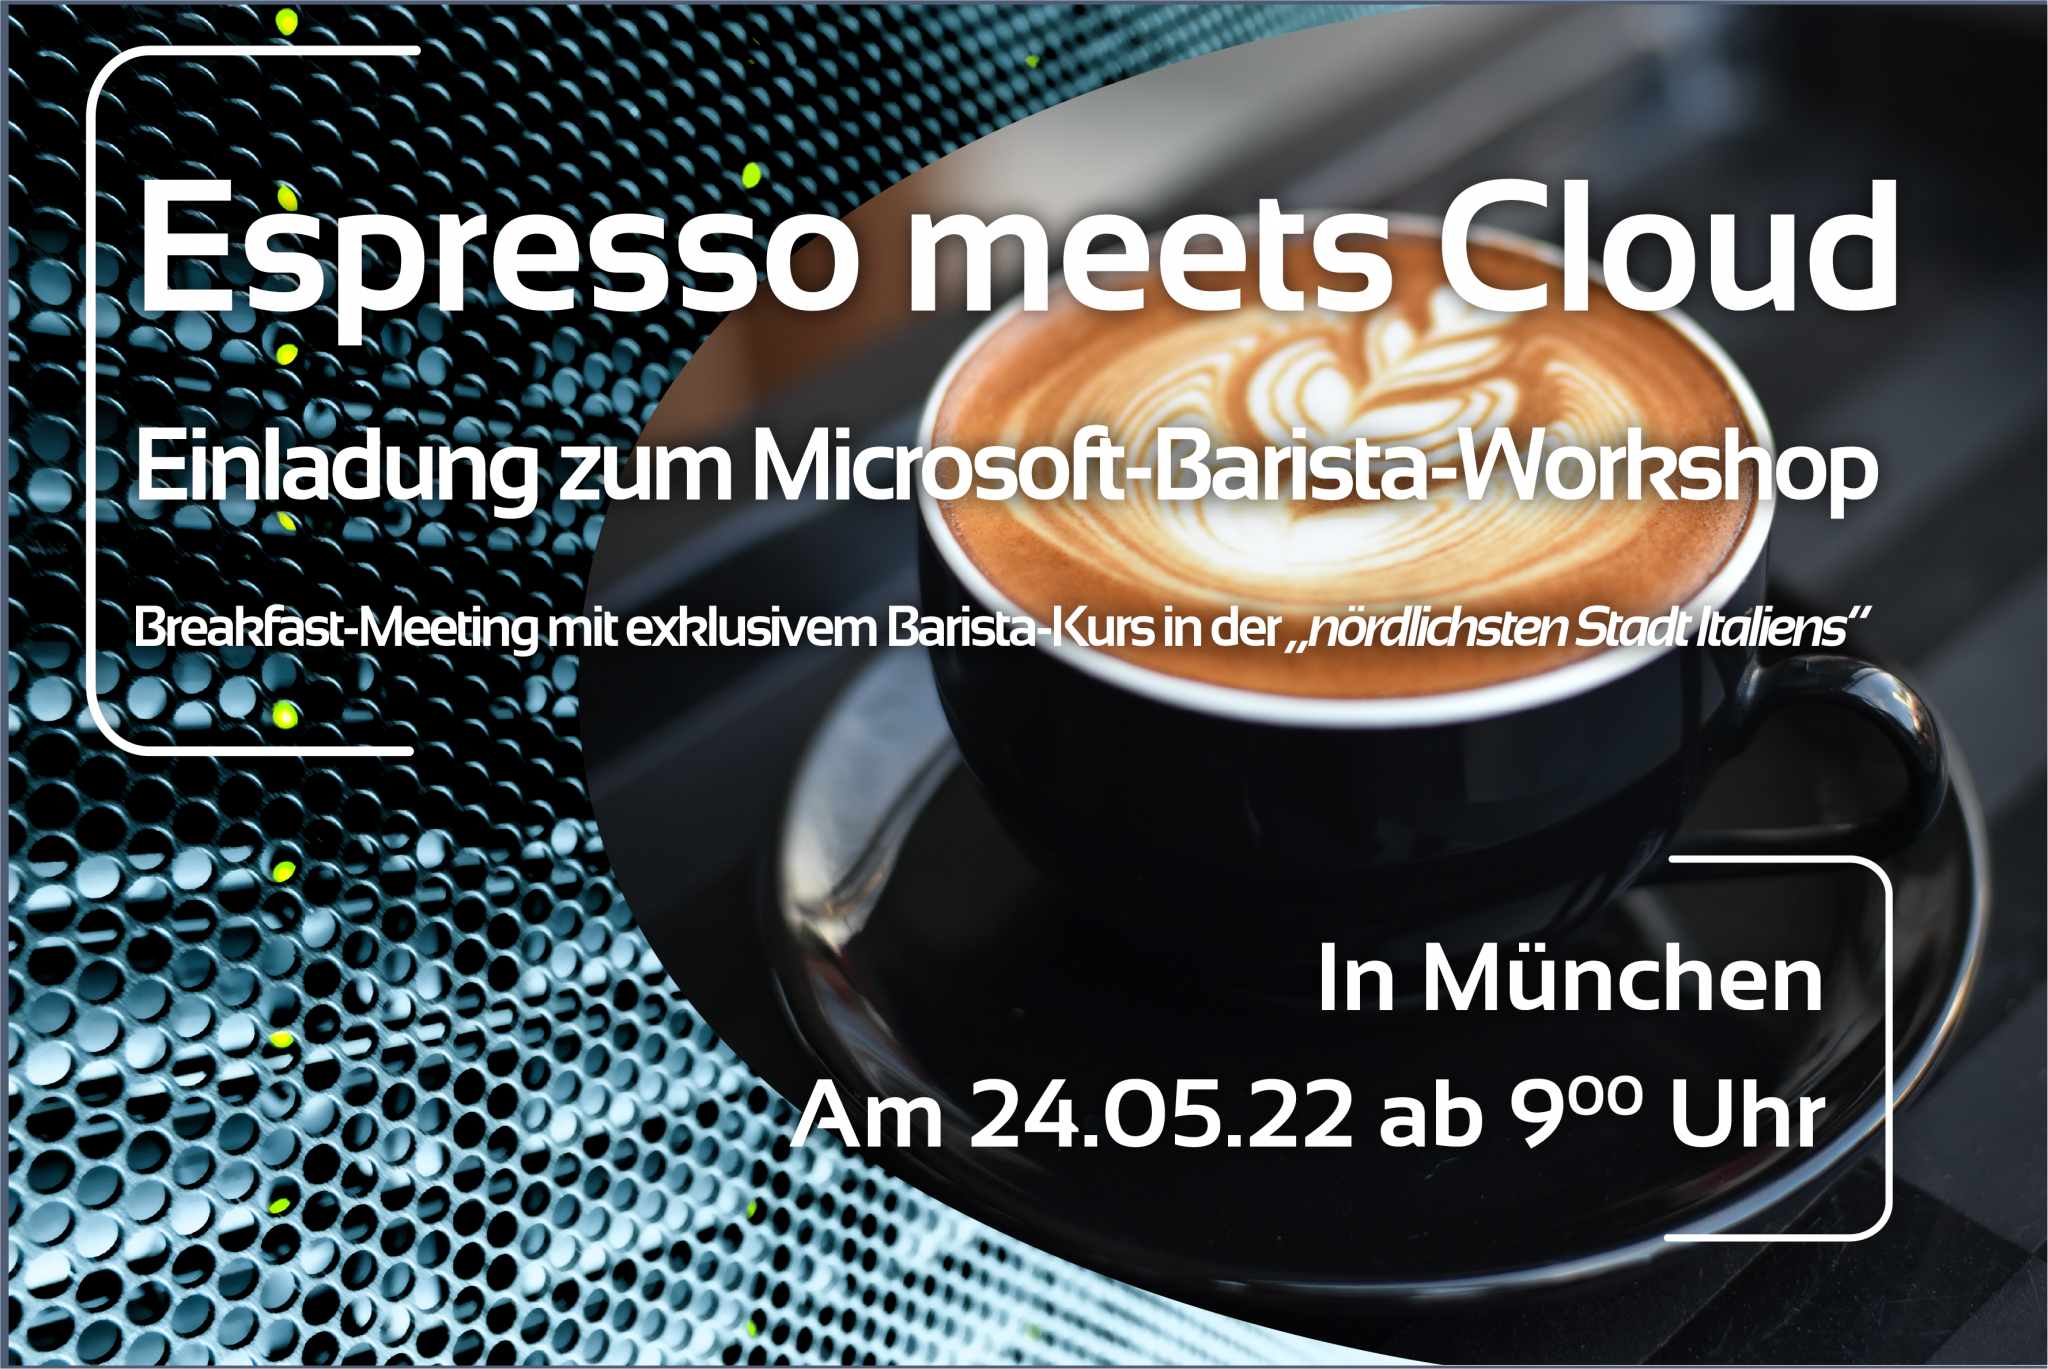 Microsoft-Barista-Workshop